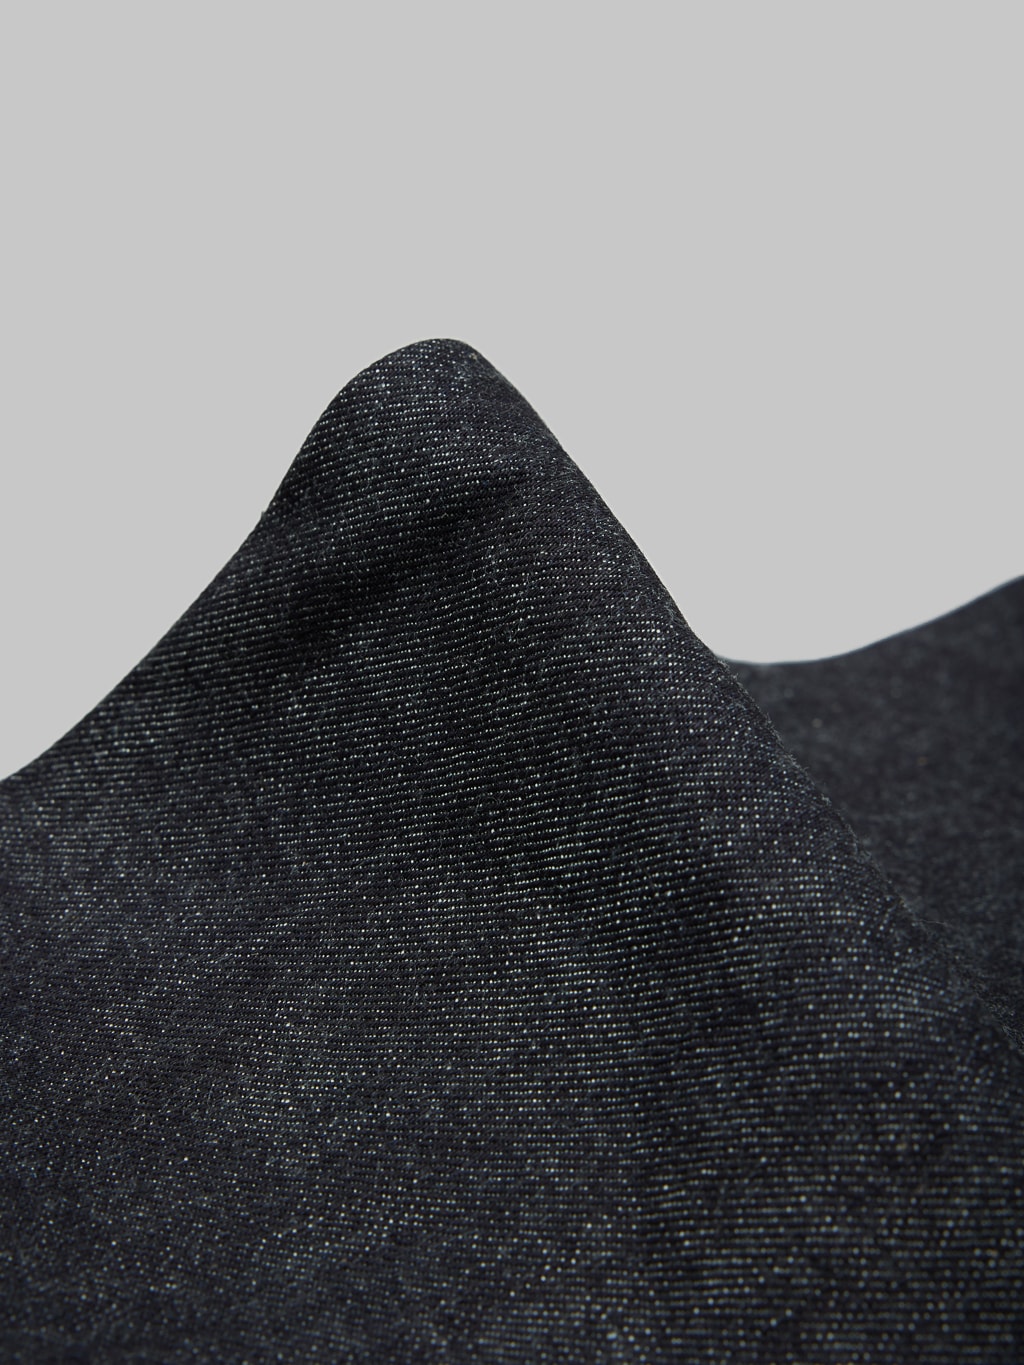 momotaro jeans 0405 v selvedge denim high tapered 100 cotton